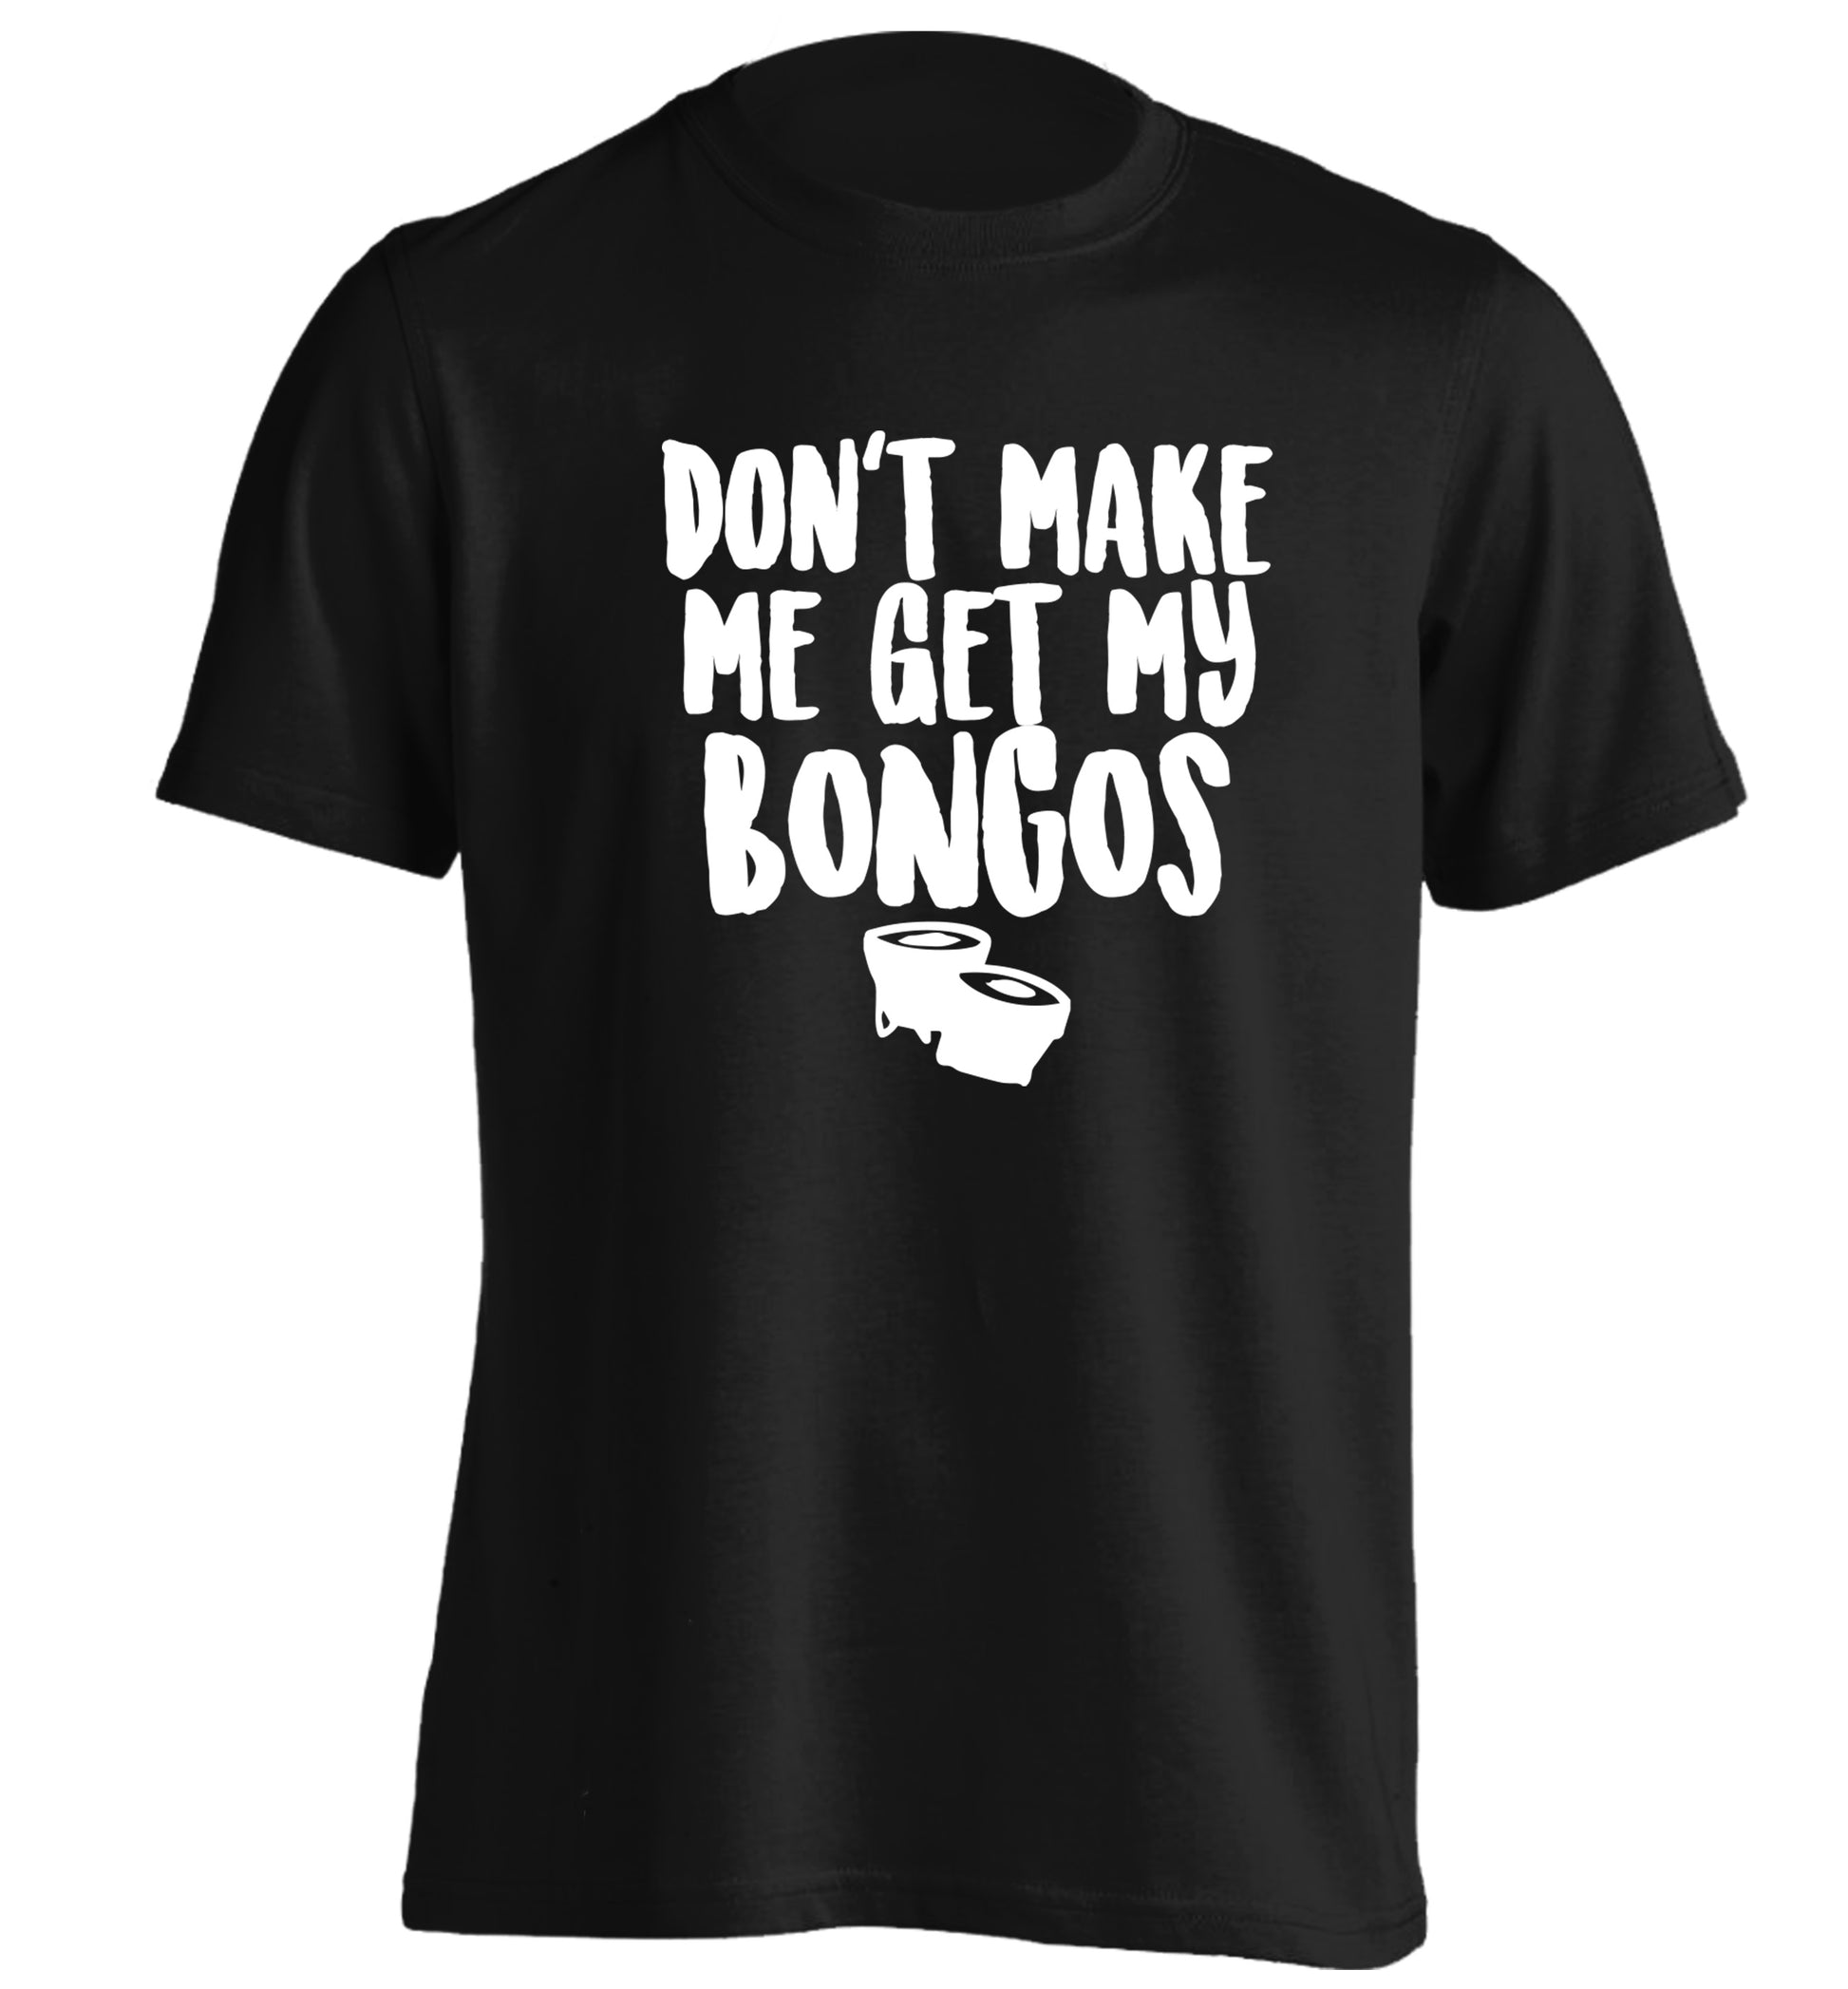 Don't make me get my bongos adults unisex black Tshirt 2XL